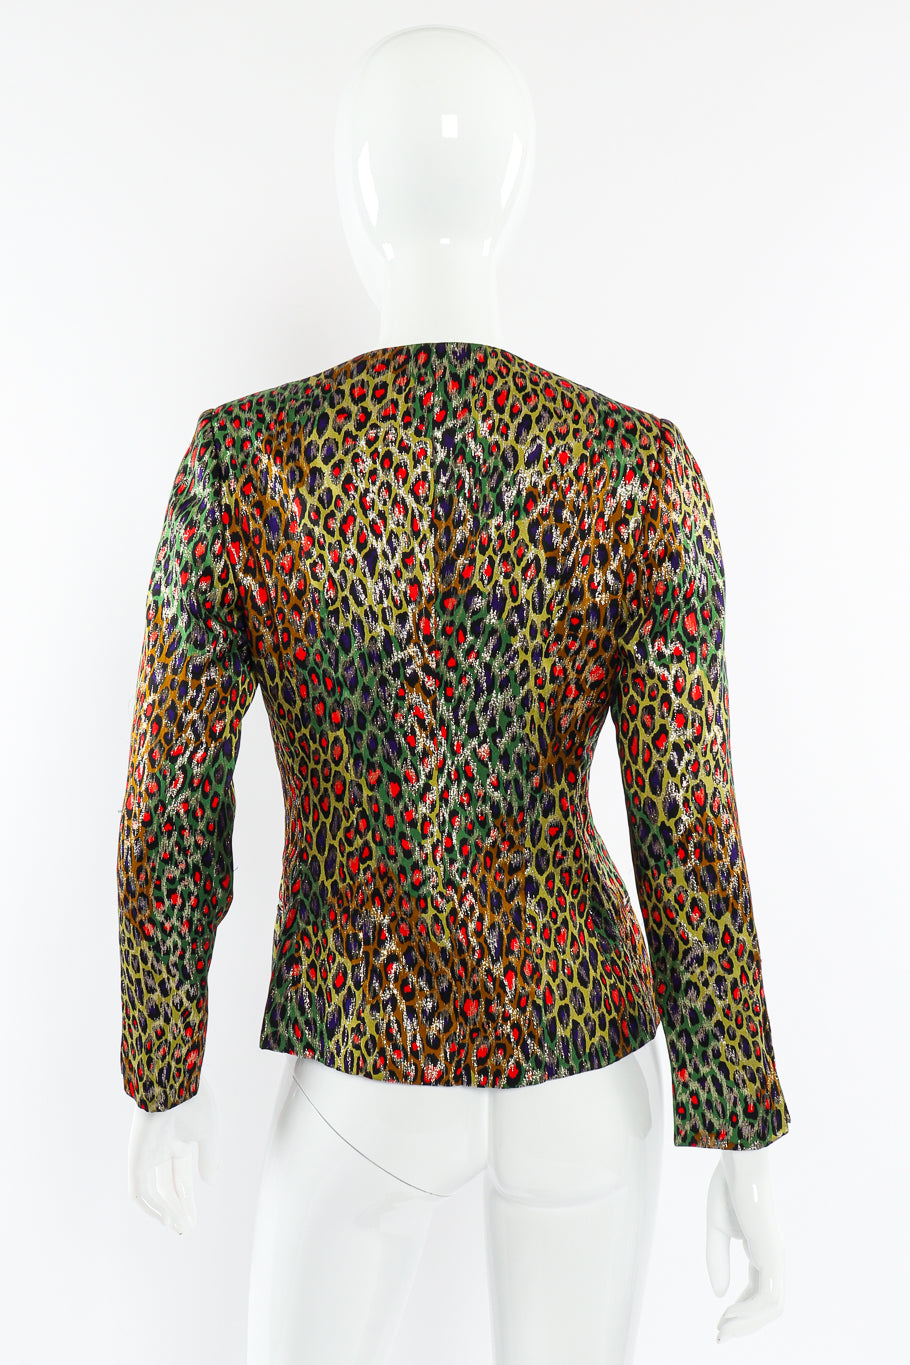 Vintage Bill Blass Leopard Print Silk Jacket back view on mannequin @Recessla